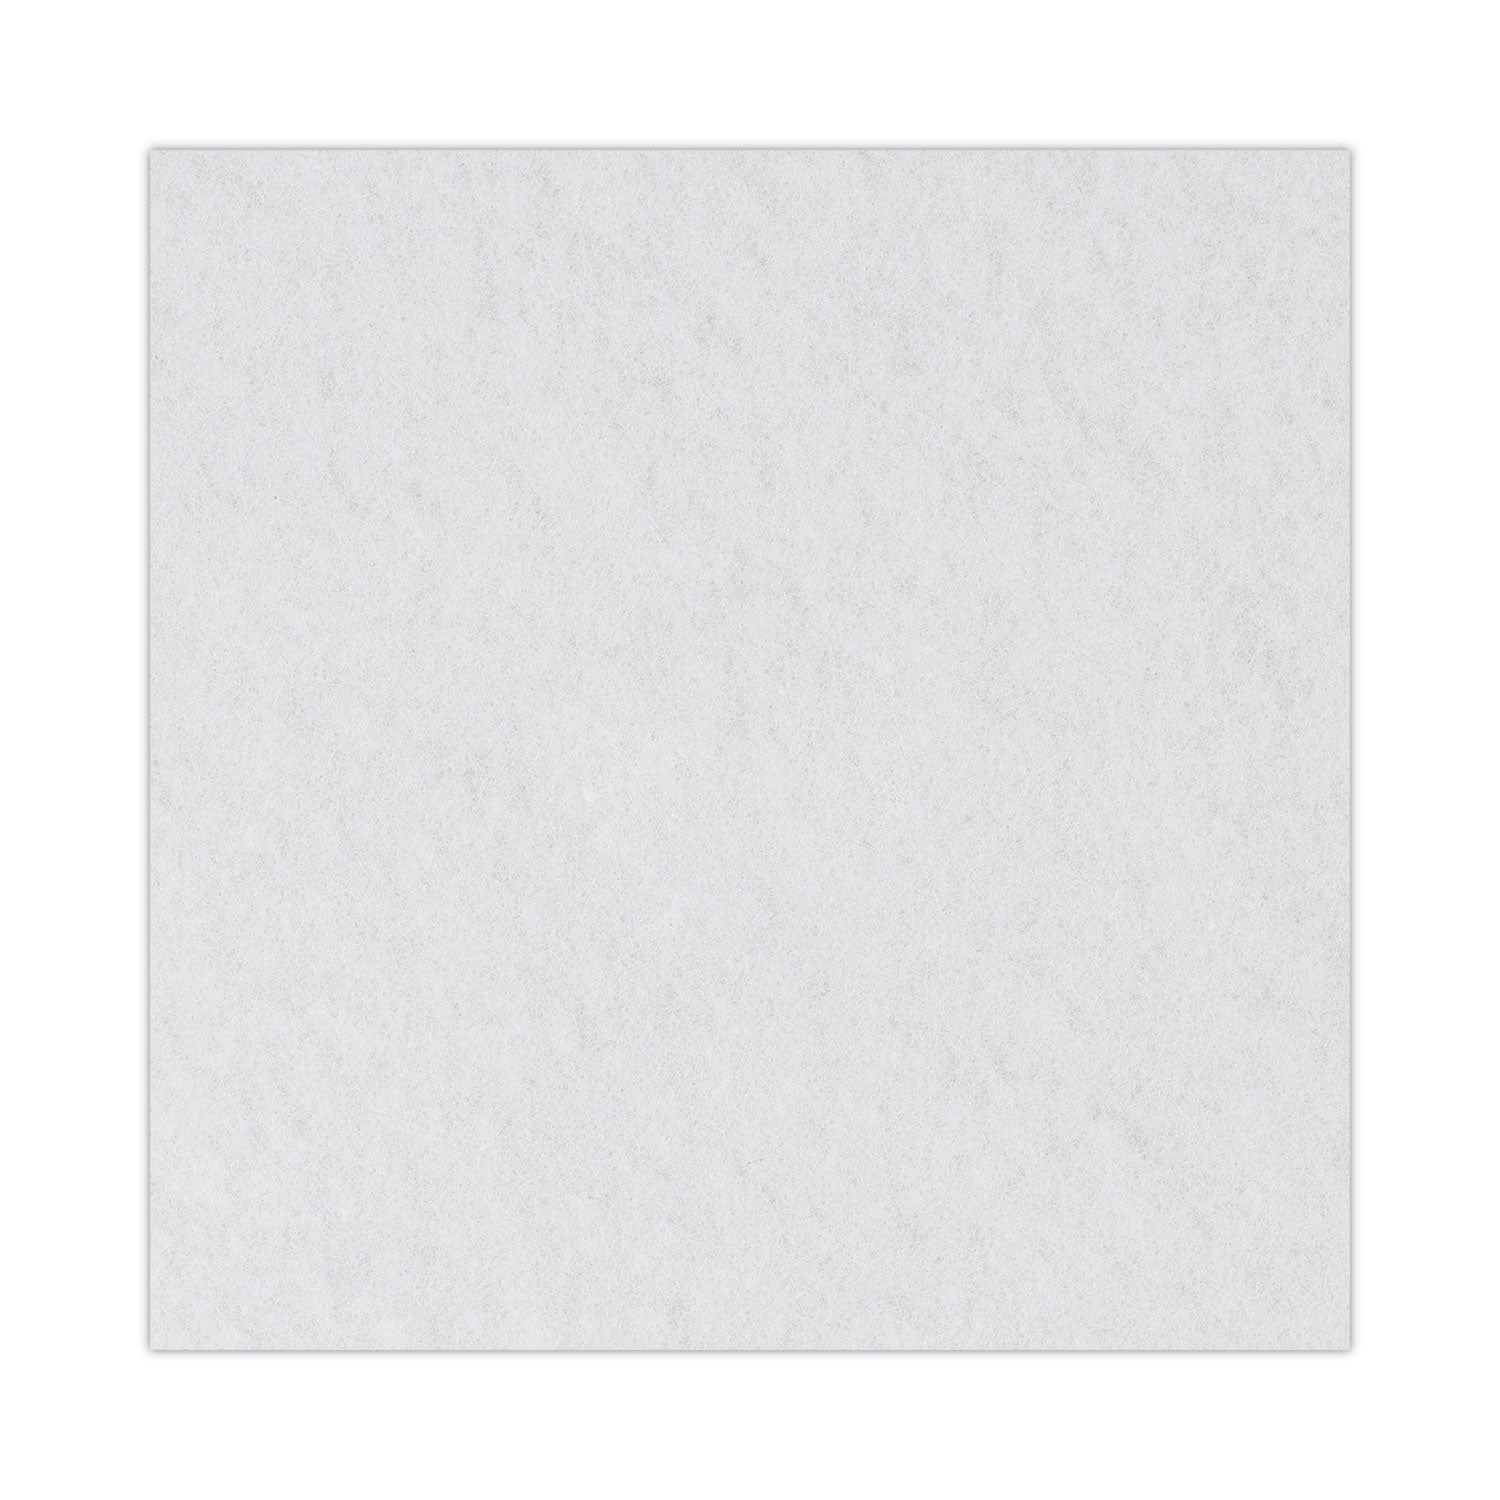 polishing-floor-pads-18-diameter-white-5-carton_bwk4018whi - 6